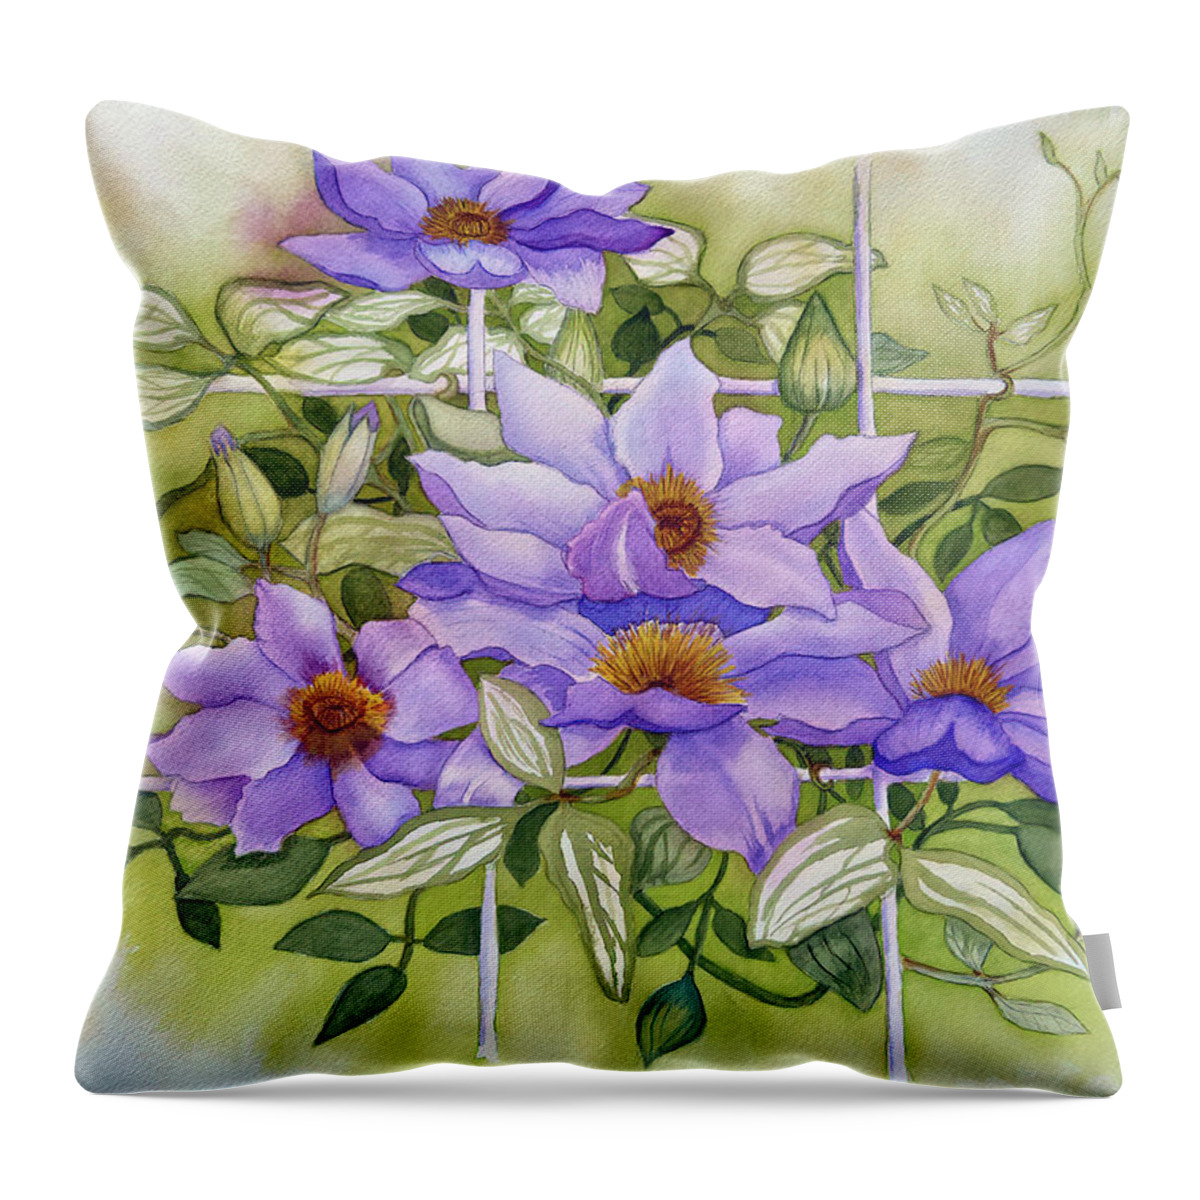 Flowers On Trellis Throw Pillow featuring the painting Purple Clematis Jackmanii On White Trellis by Deborah League